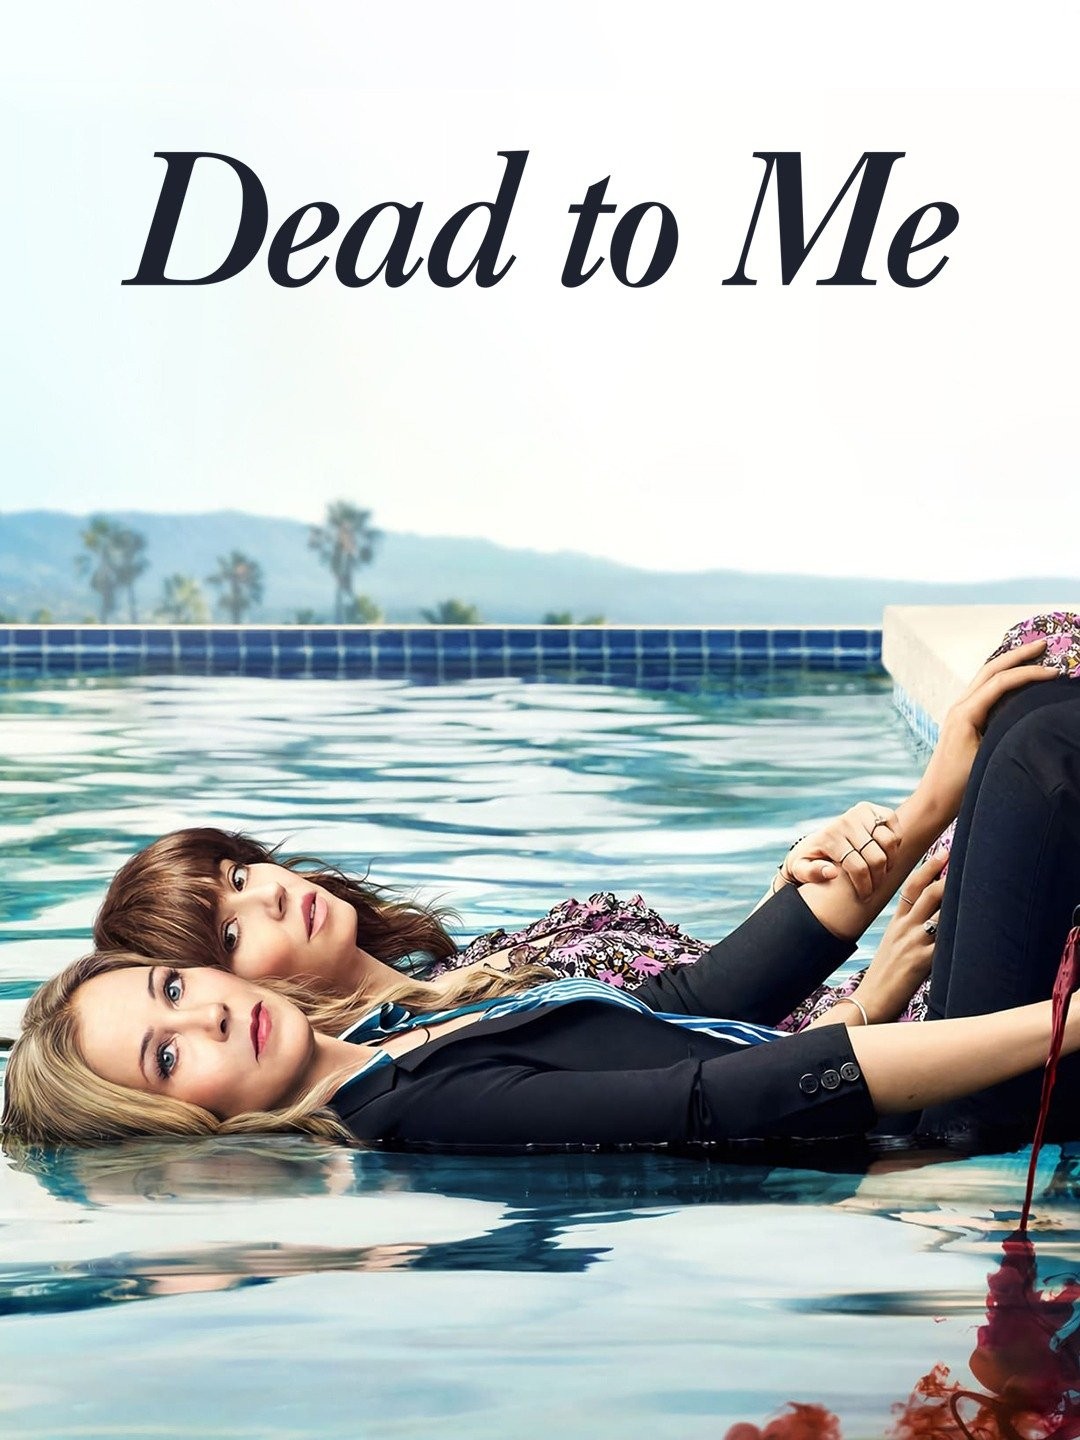 Dead to Me, Season 1 Official Trailer [HD]